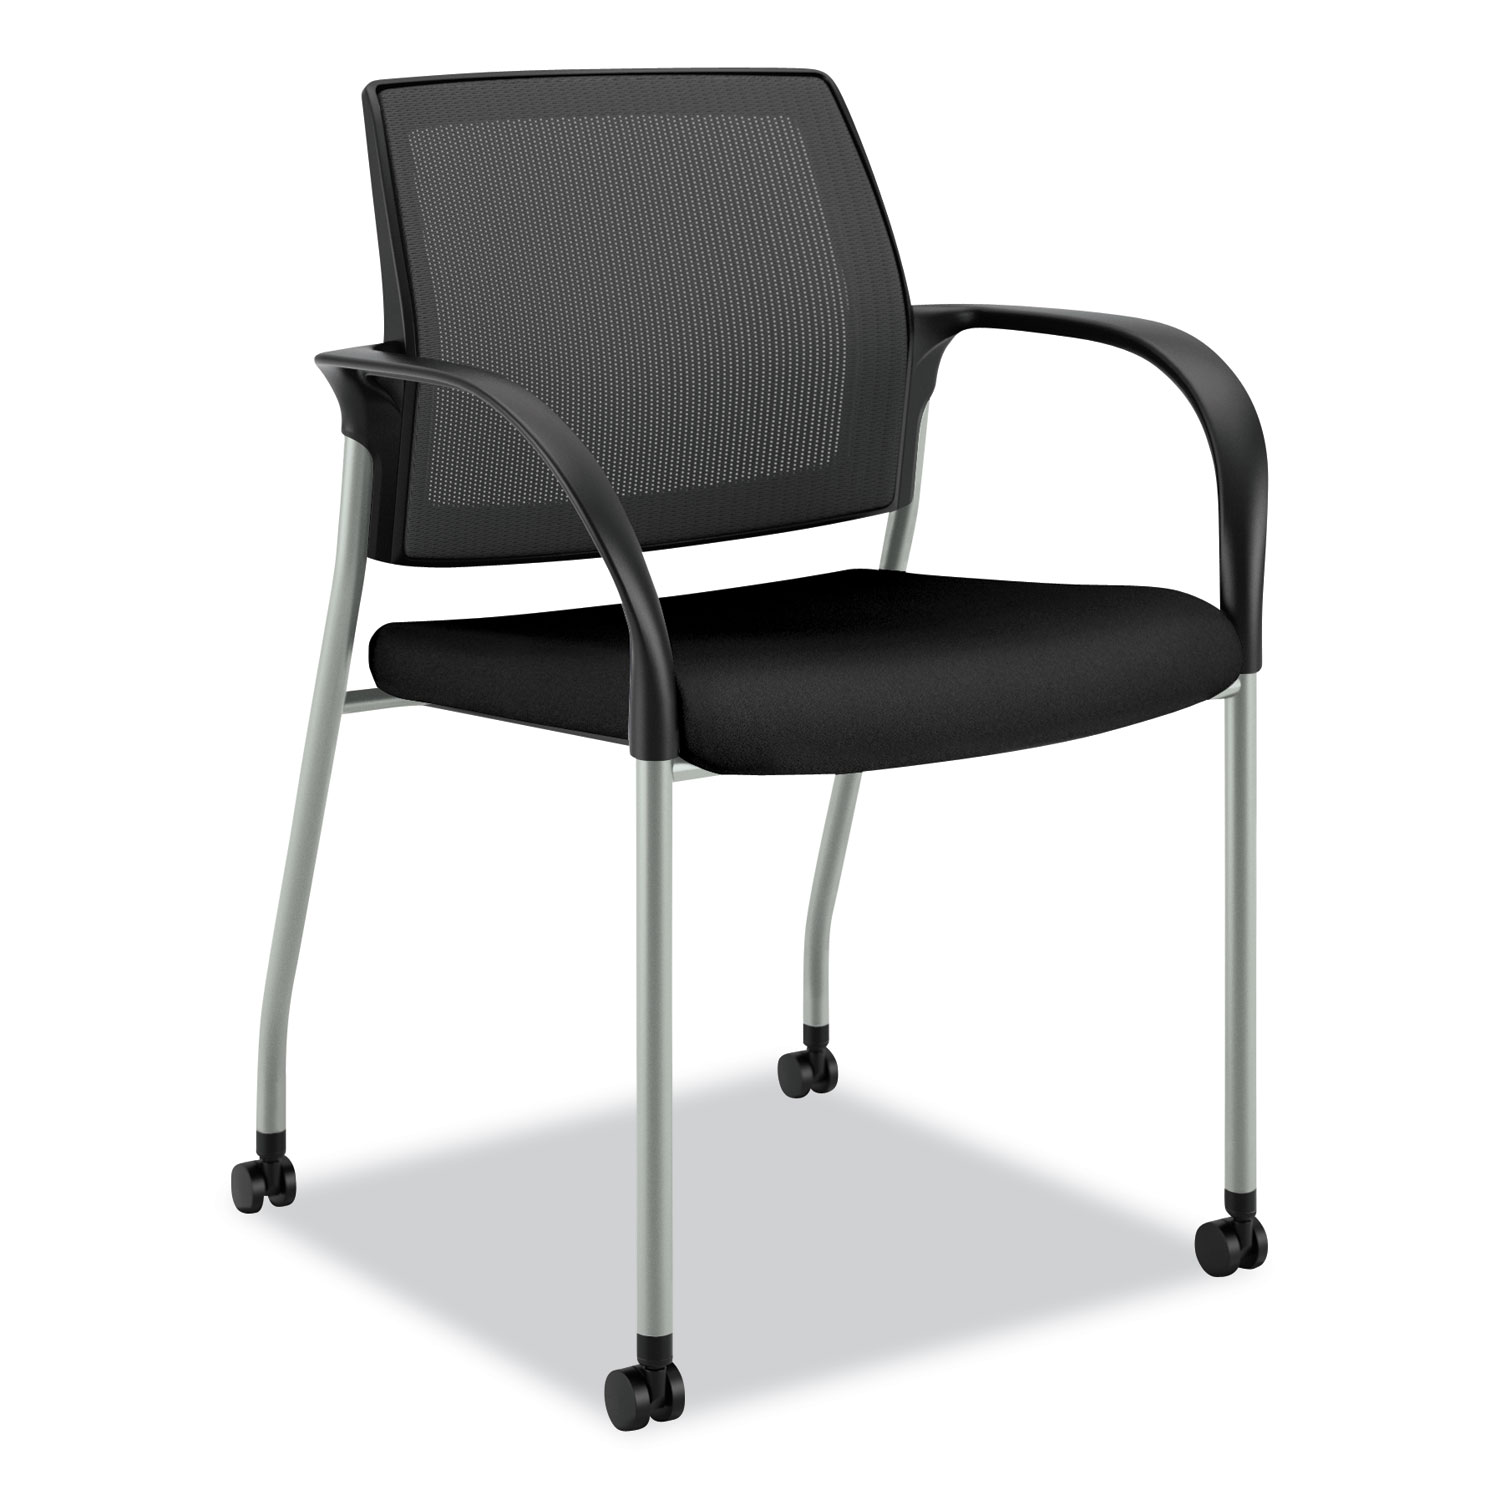  HON HONIS107IMCU10P Ignition Series Mesh Back Mobile Stacking Chair, Fabric, Black Seat, Black Back, Platinum Base (HONIS107IMCU10P) 